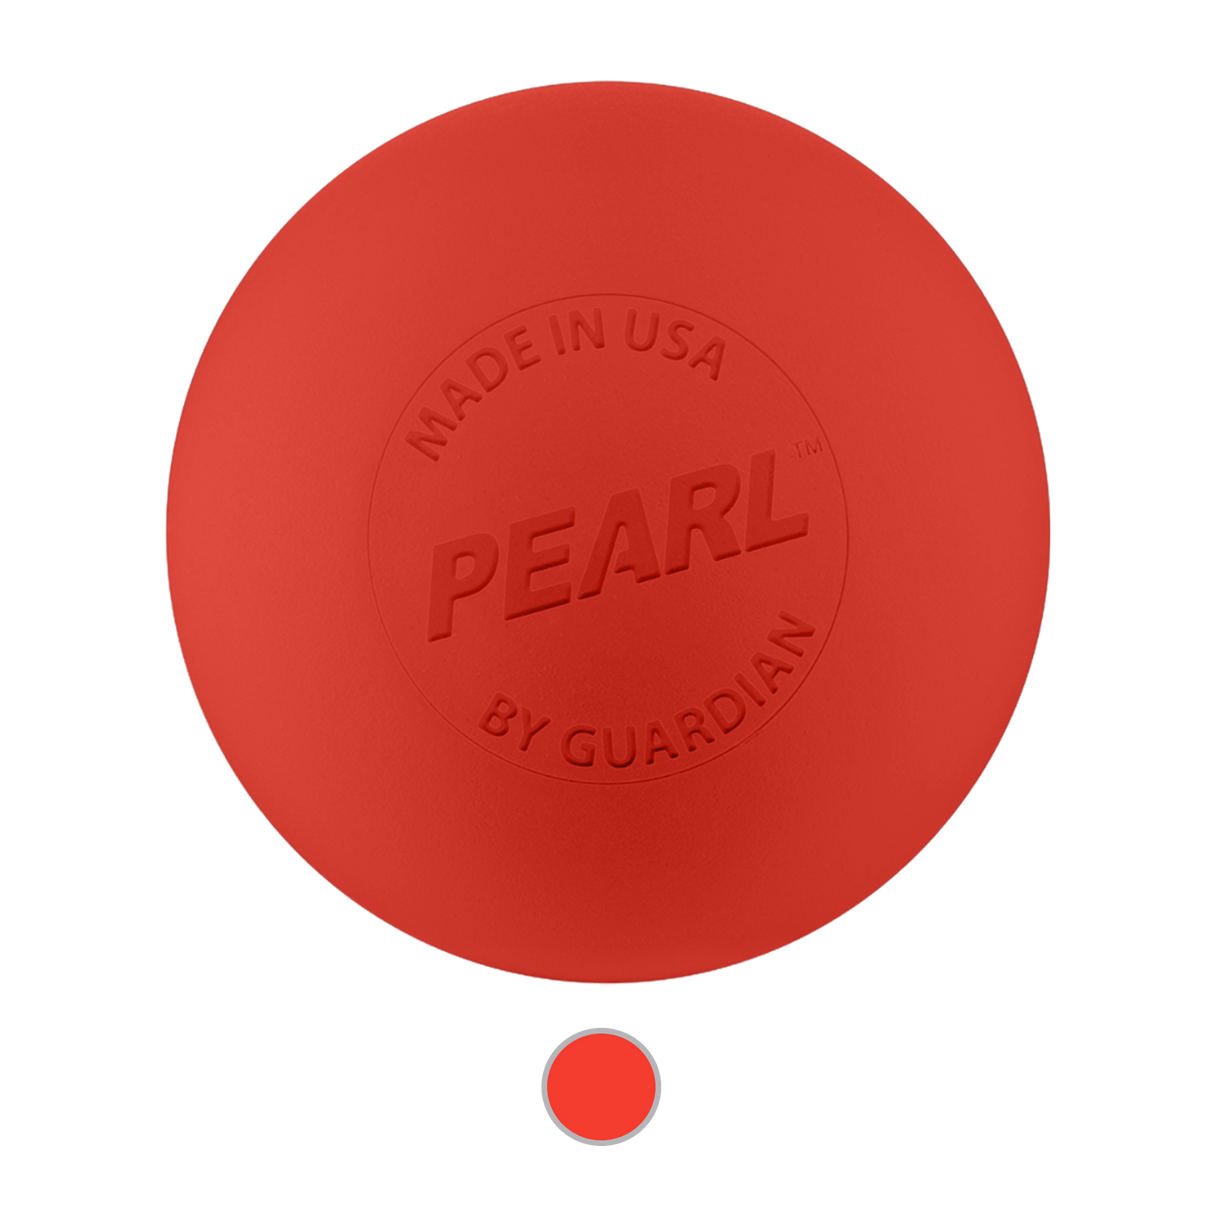 PEARL NX Lacrosse Ball (single ball)